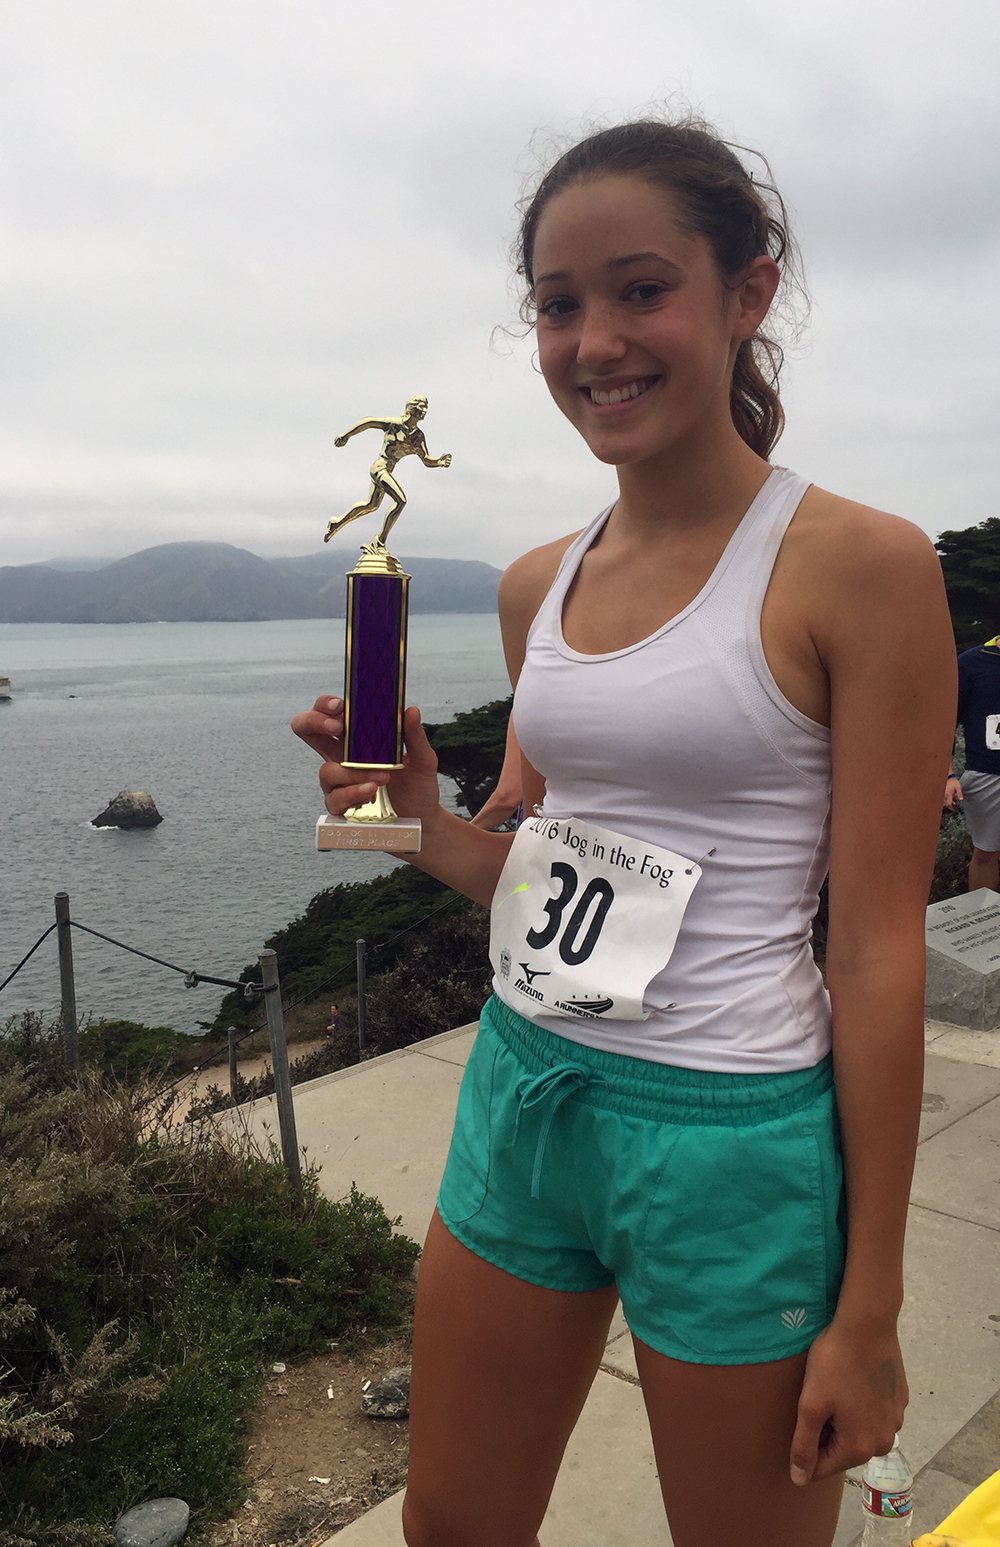 Top woman, Jessica Blelloch, age 15 (29:42)